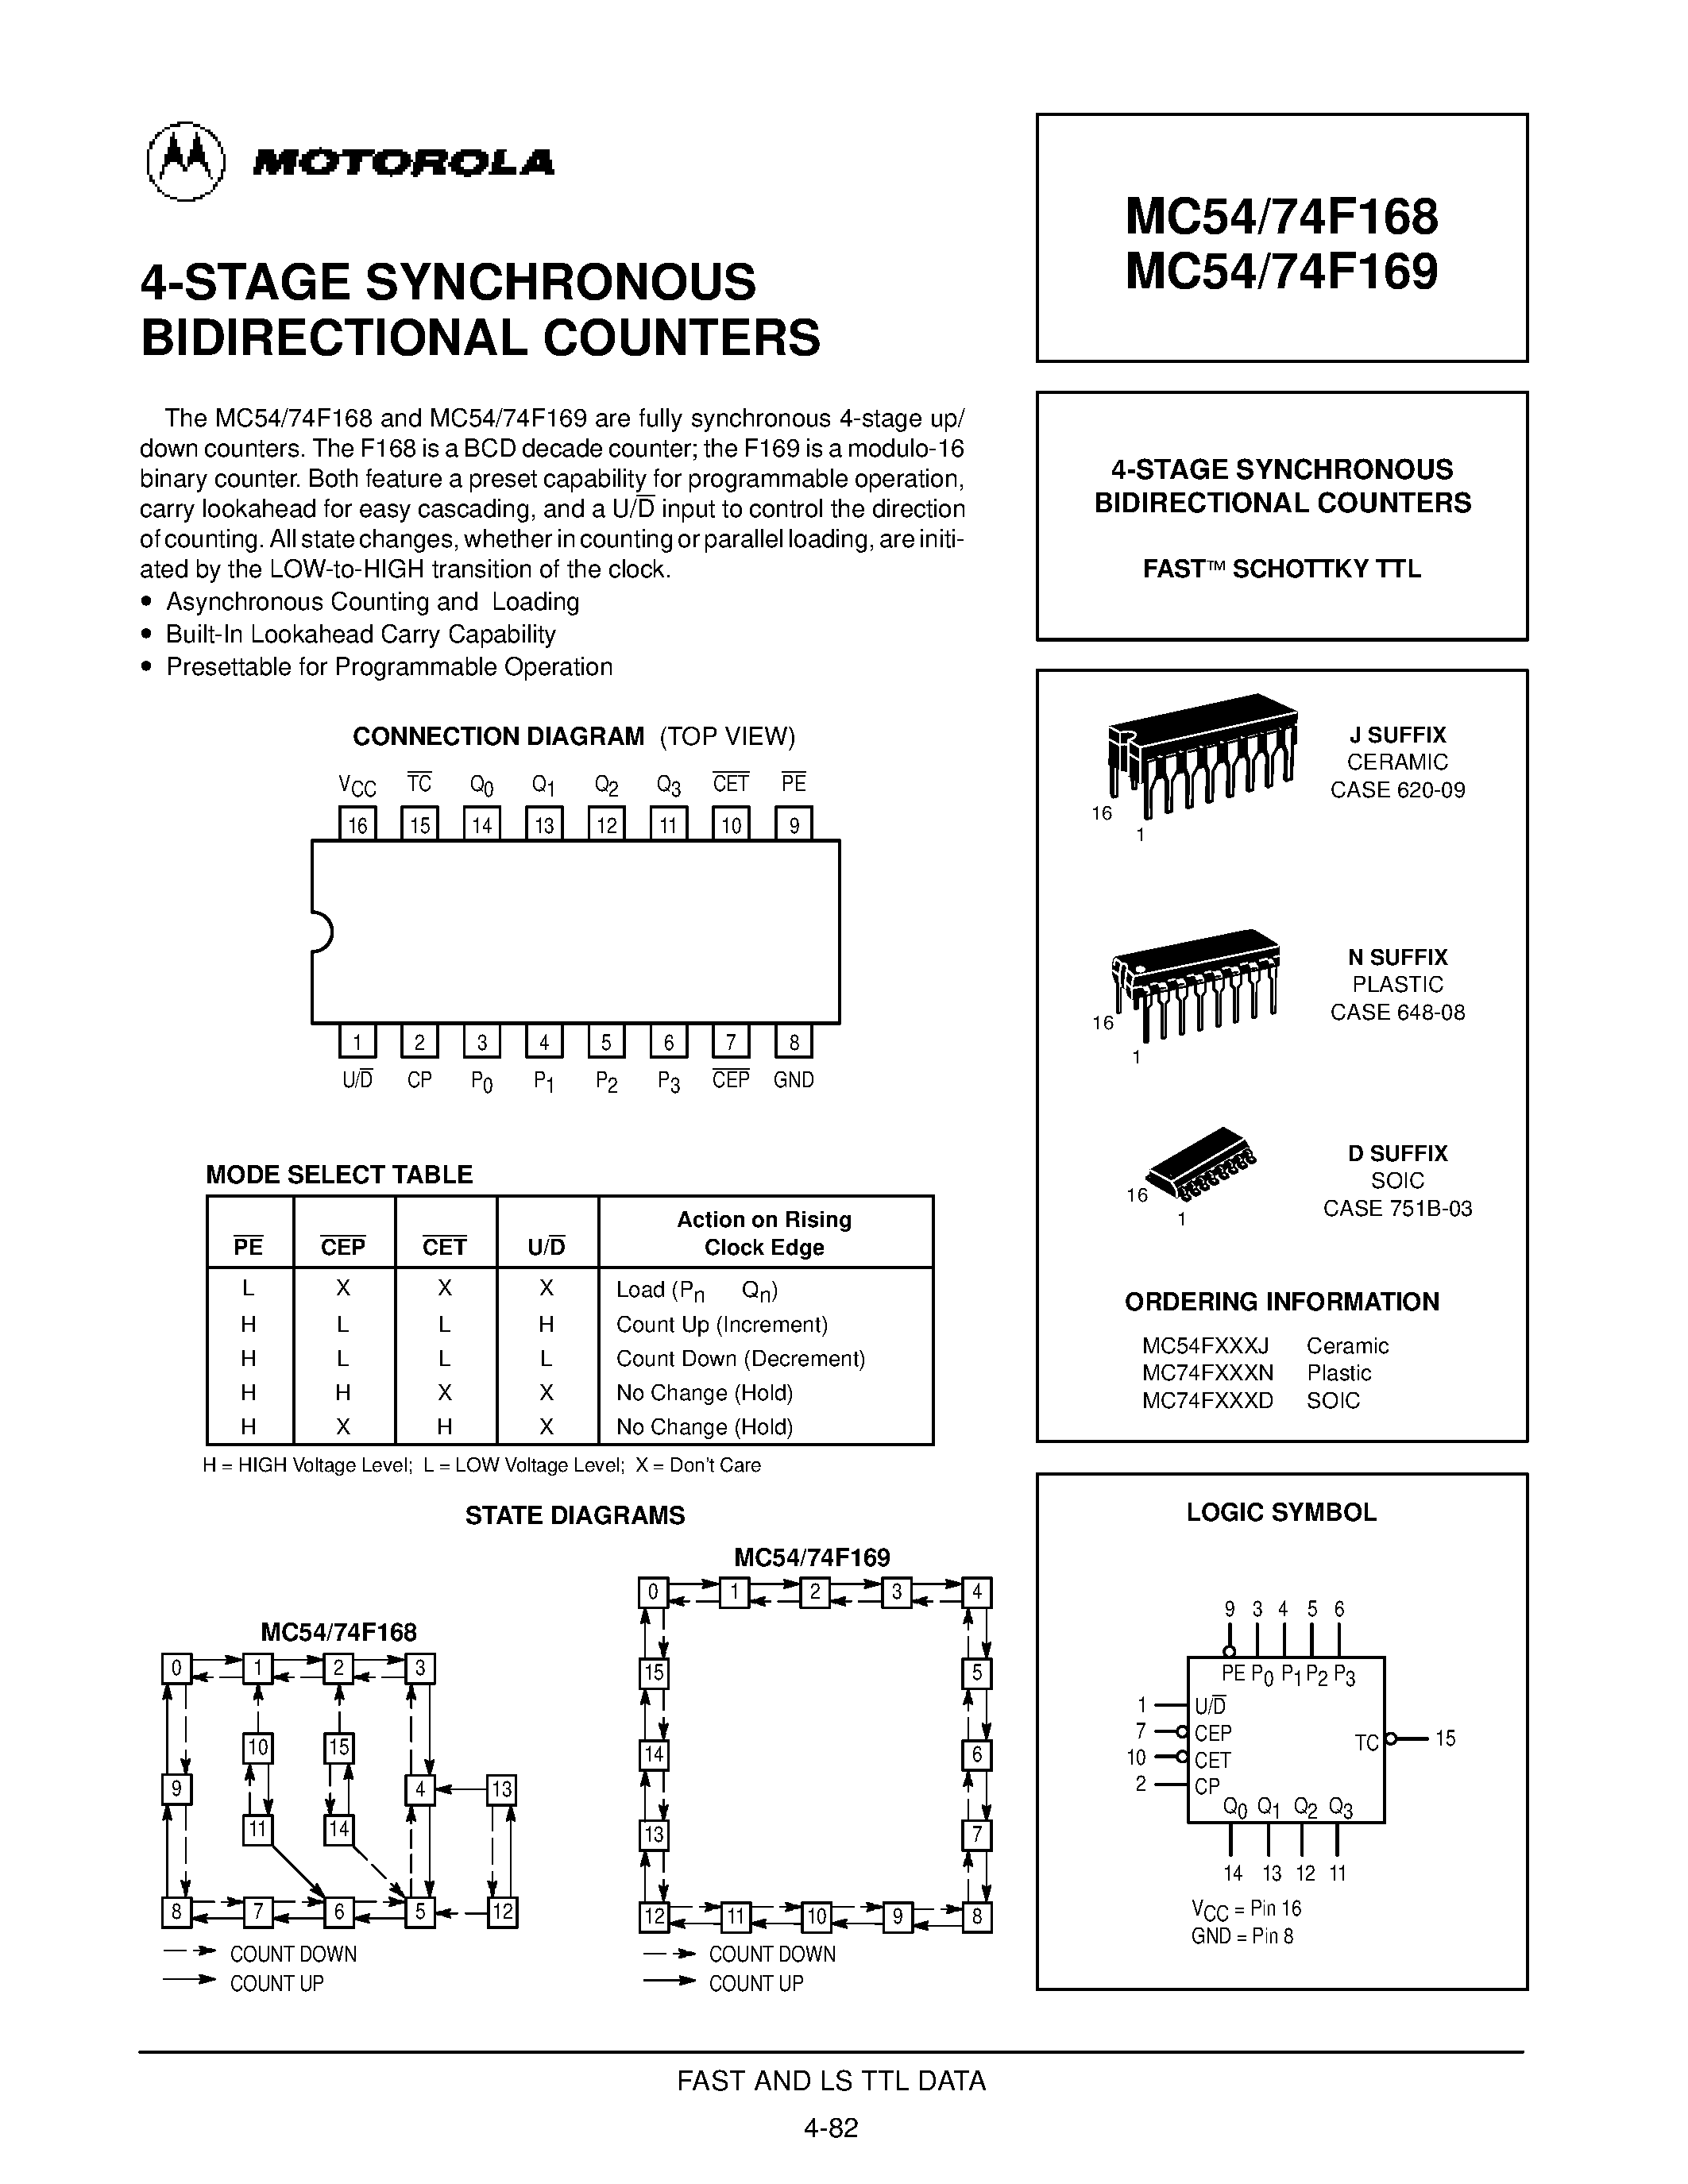 Datasheet MC74F168 - (MC74F168 / MC74F169) 4-STAGE SYNCHRONOUS BIDIRECTIONAL COUNTERS FAST SCHOTTKY TTL page 1